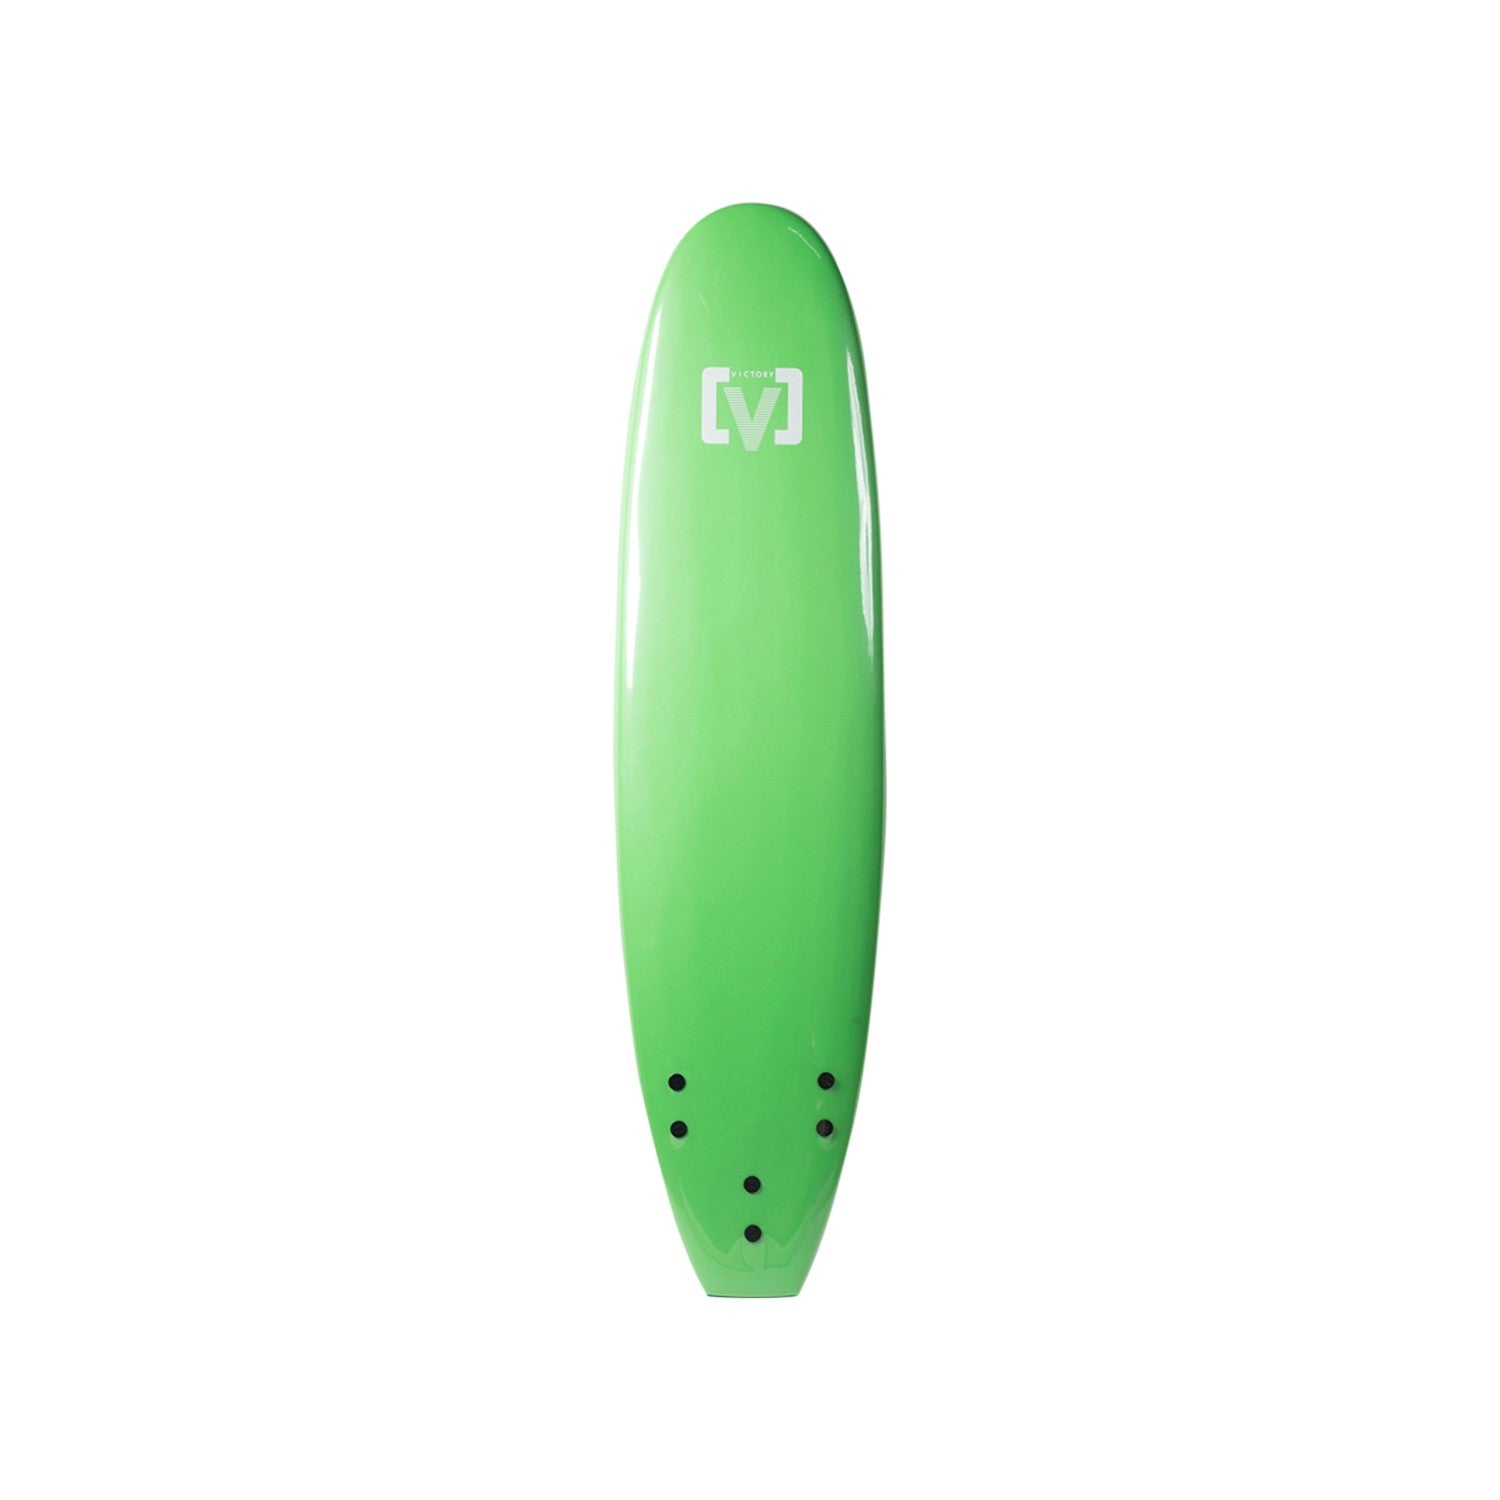 VICTORY - EPS Softboard - Foam surfboard - Evolutive 6'0 - Green